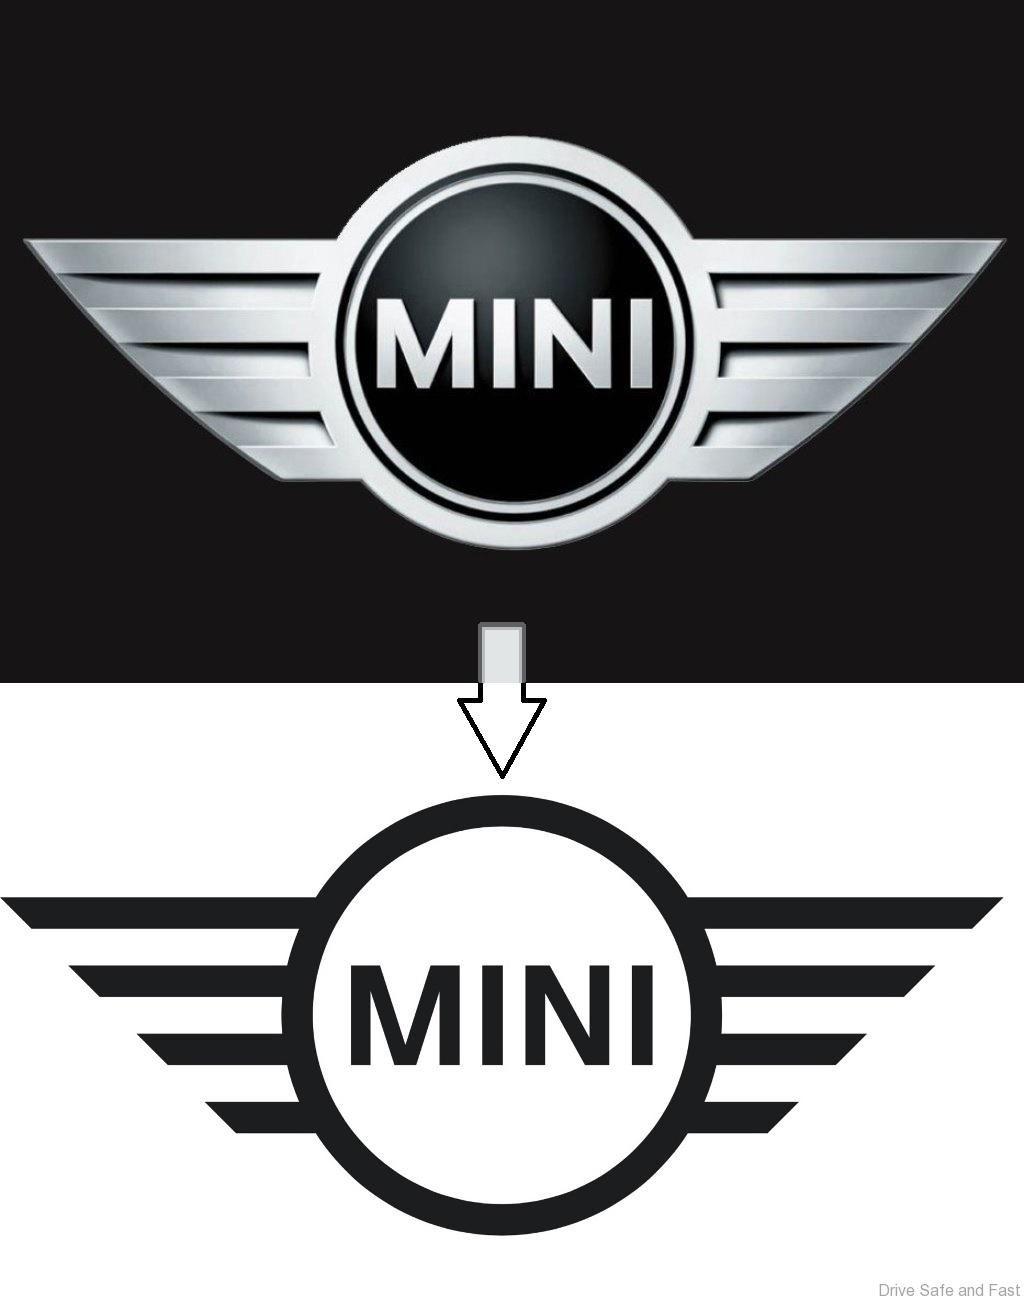 New Mini Logo - MINI Has a new Logo and Brand Strategy